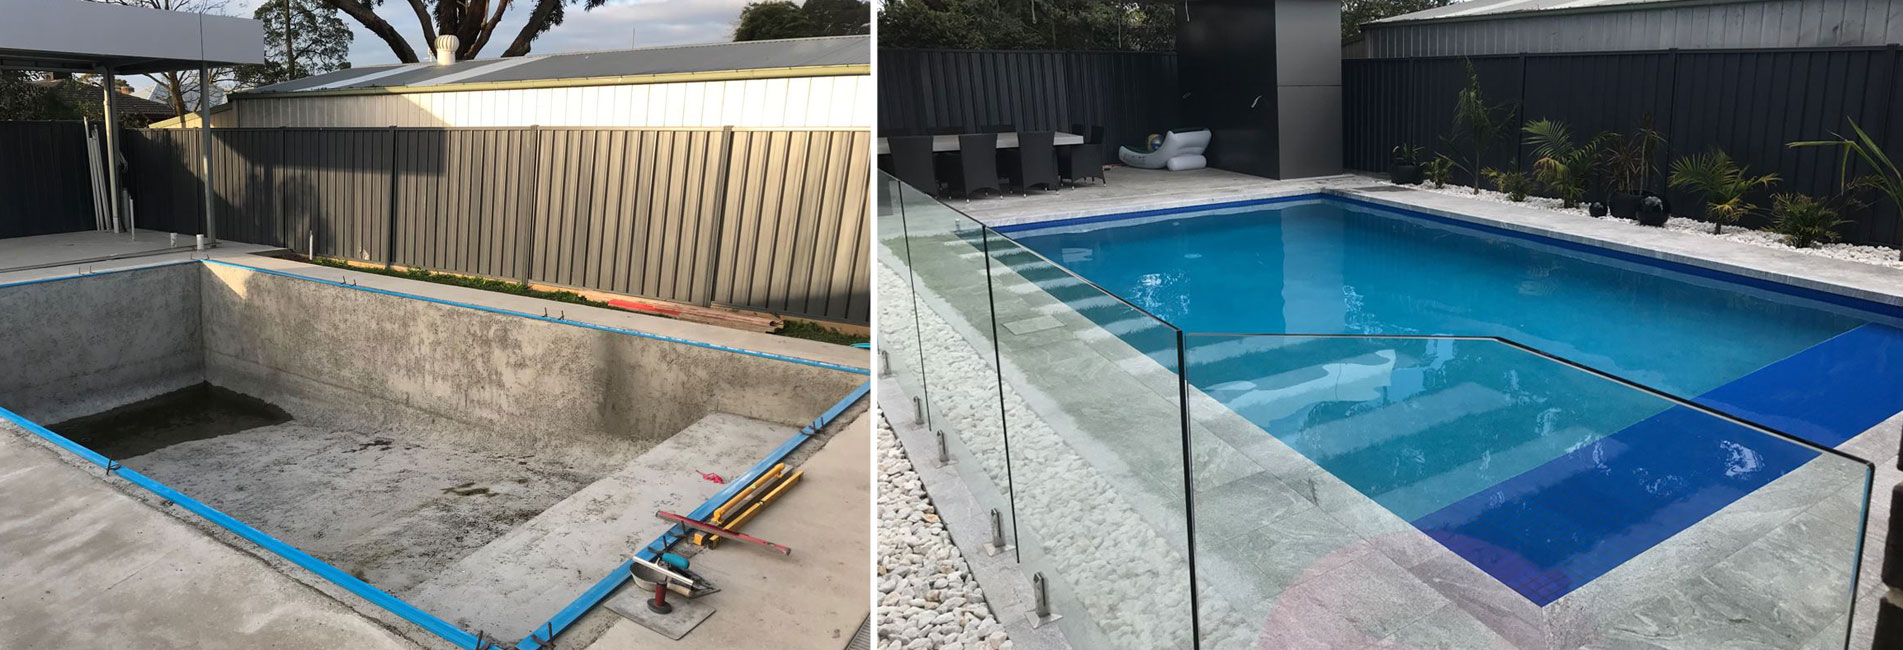 Pool Builders Melbourne, Pool Tiling Dandenong, Pool Services Cranbourne, Fix Pool Filters Narre Warren